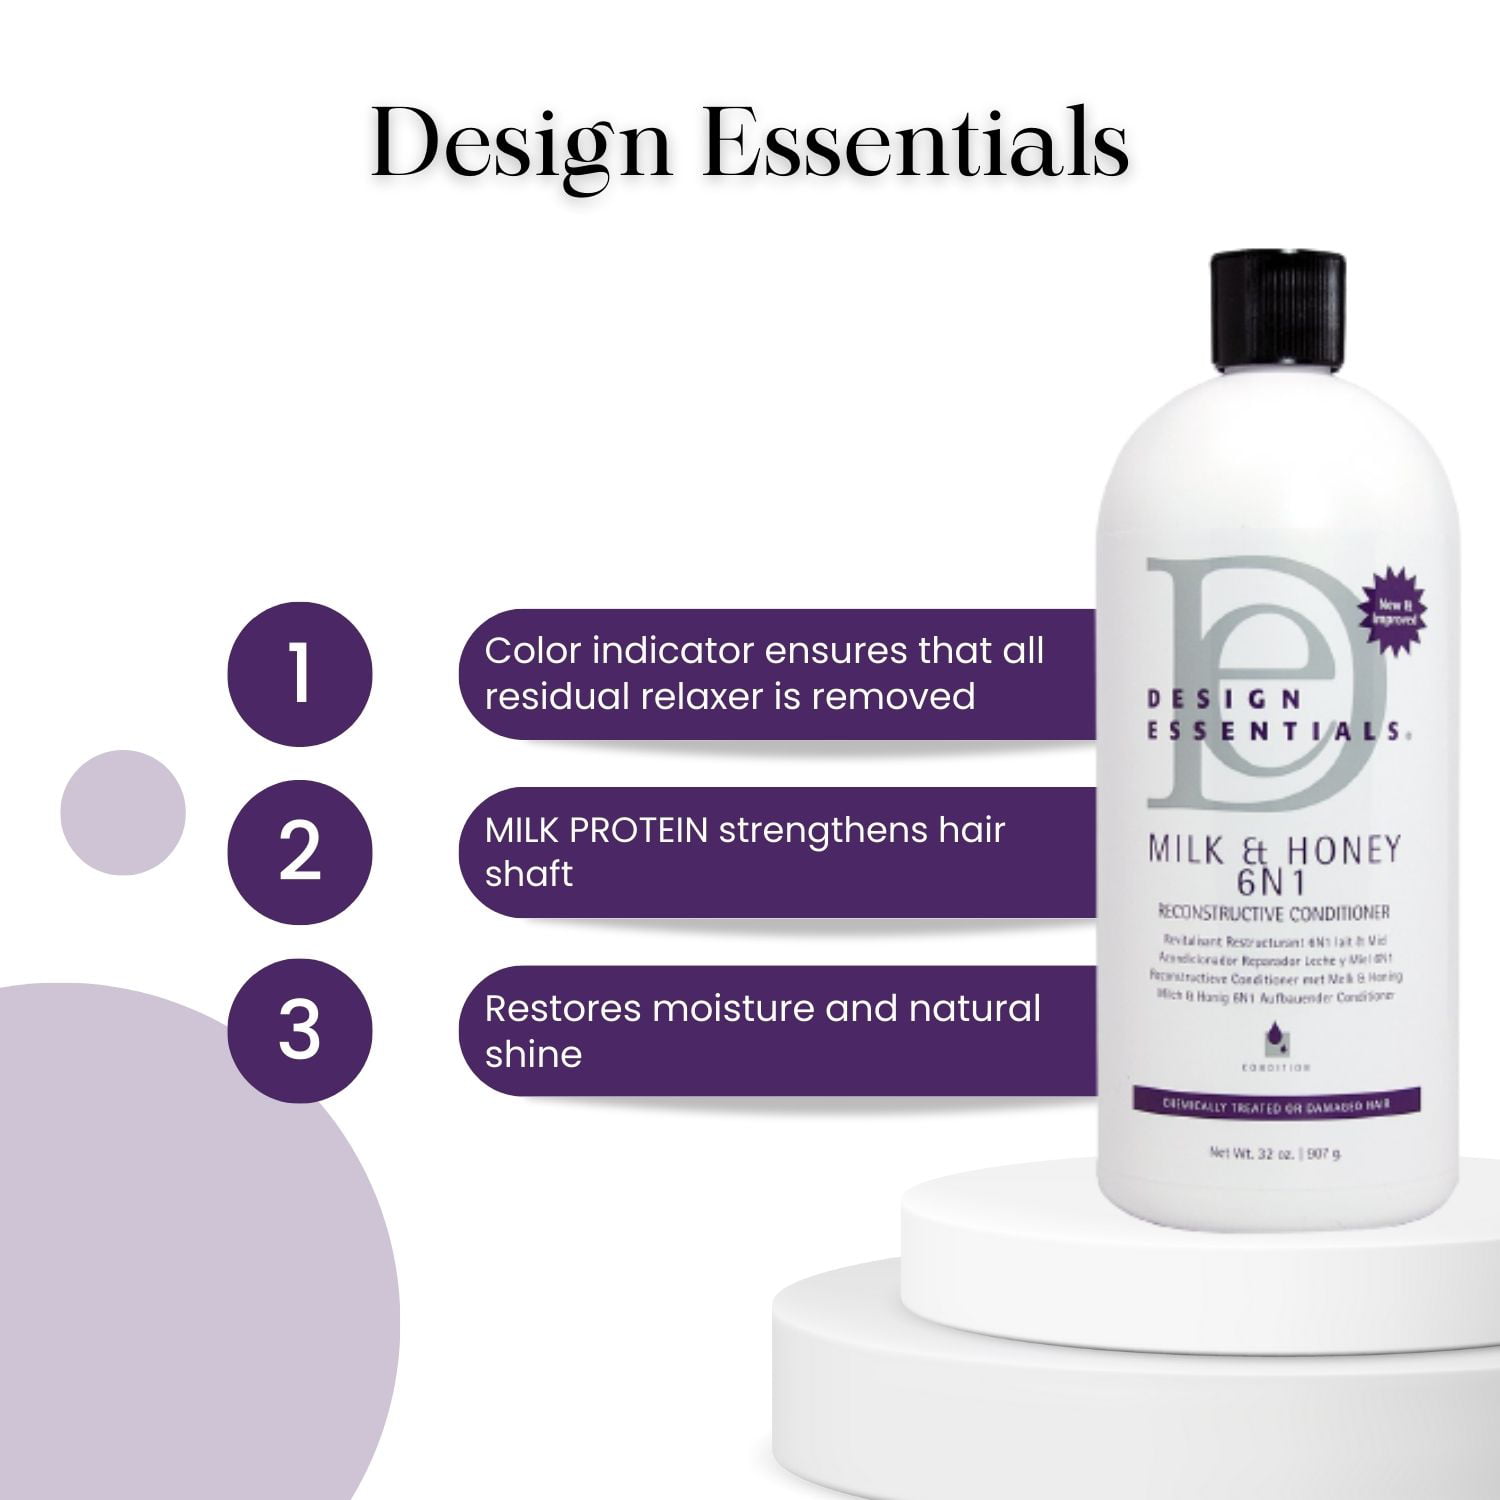 Design Essentials Milk & Honey 6N1 Reconstructive Conditioner